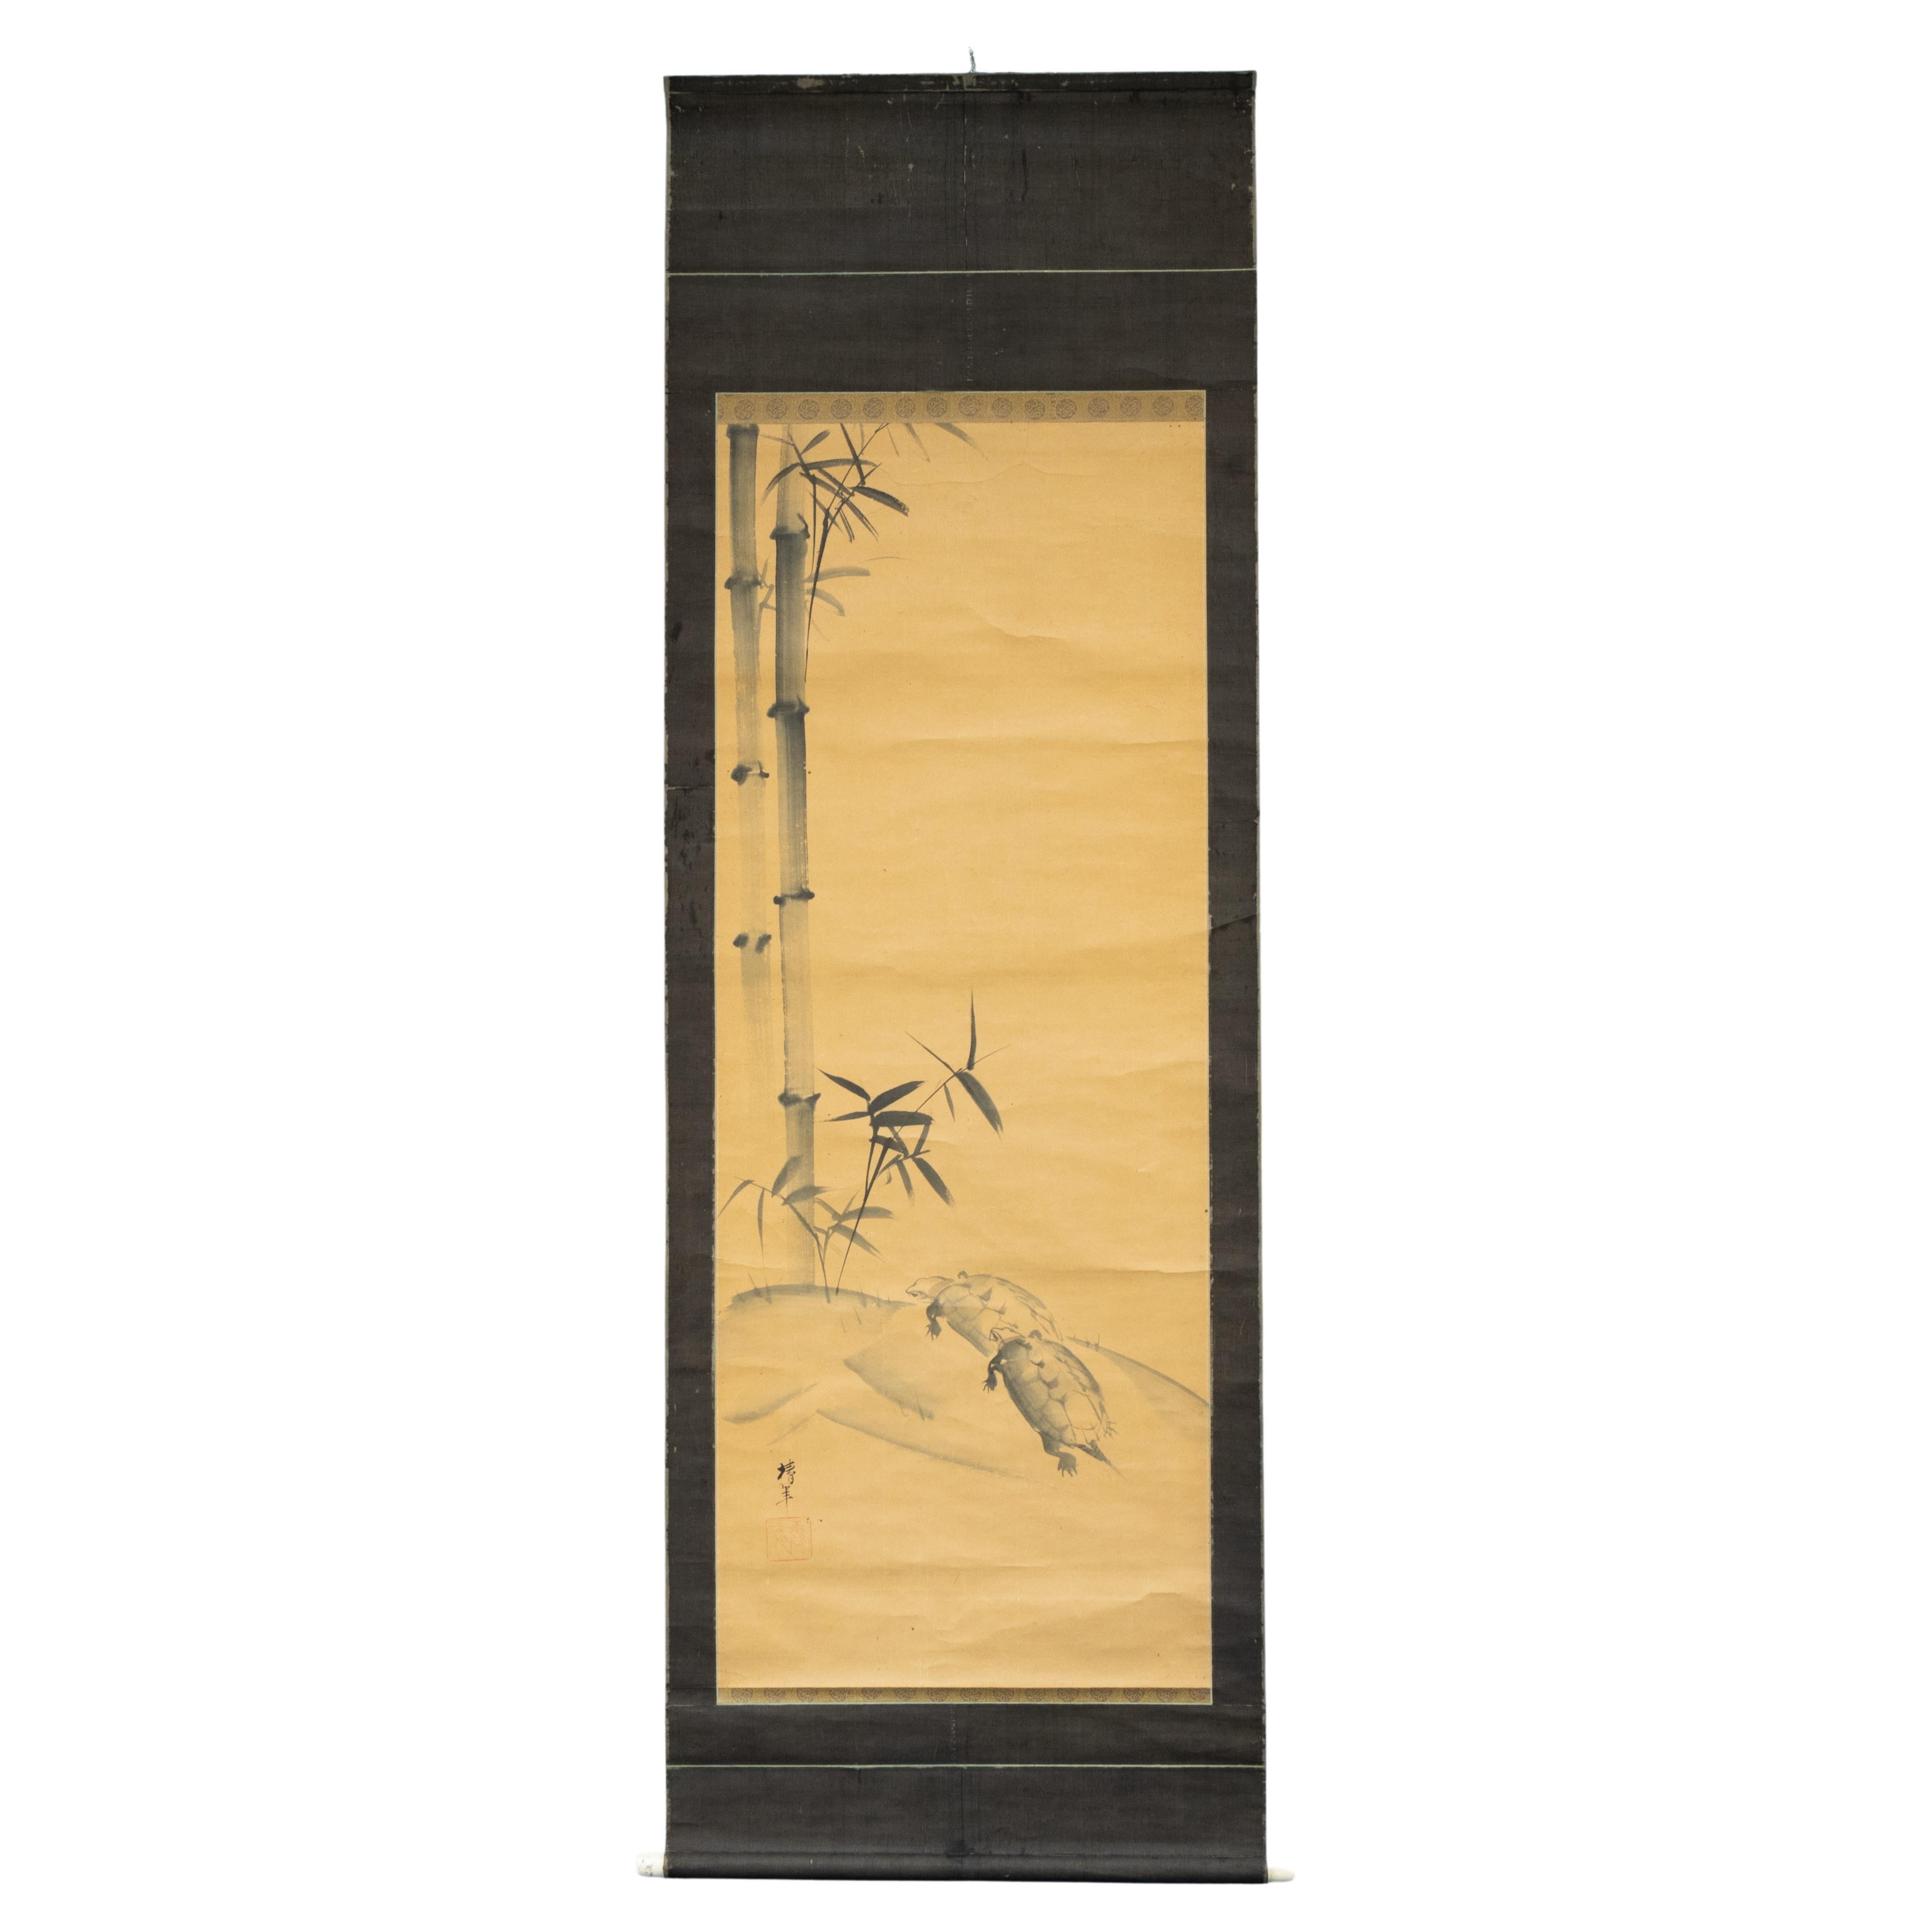 Japanese Edo Period Painting Scroll Ônishi Chinnen '1792 - 1851'  Artist Signed